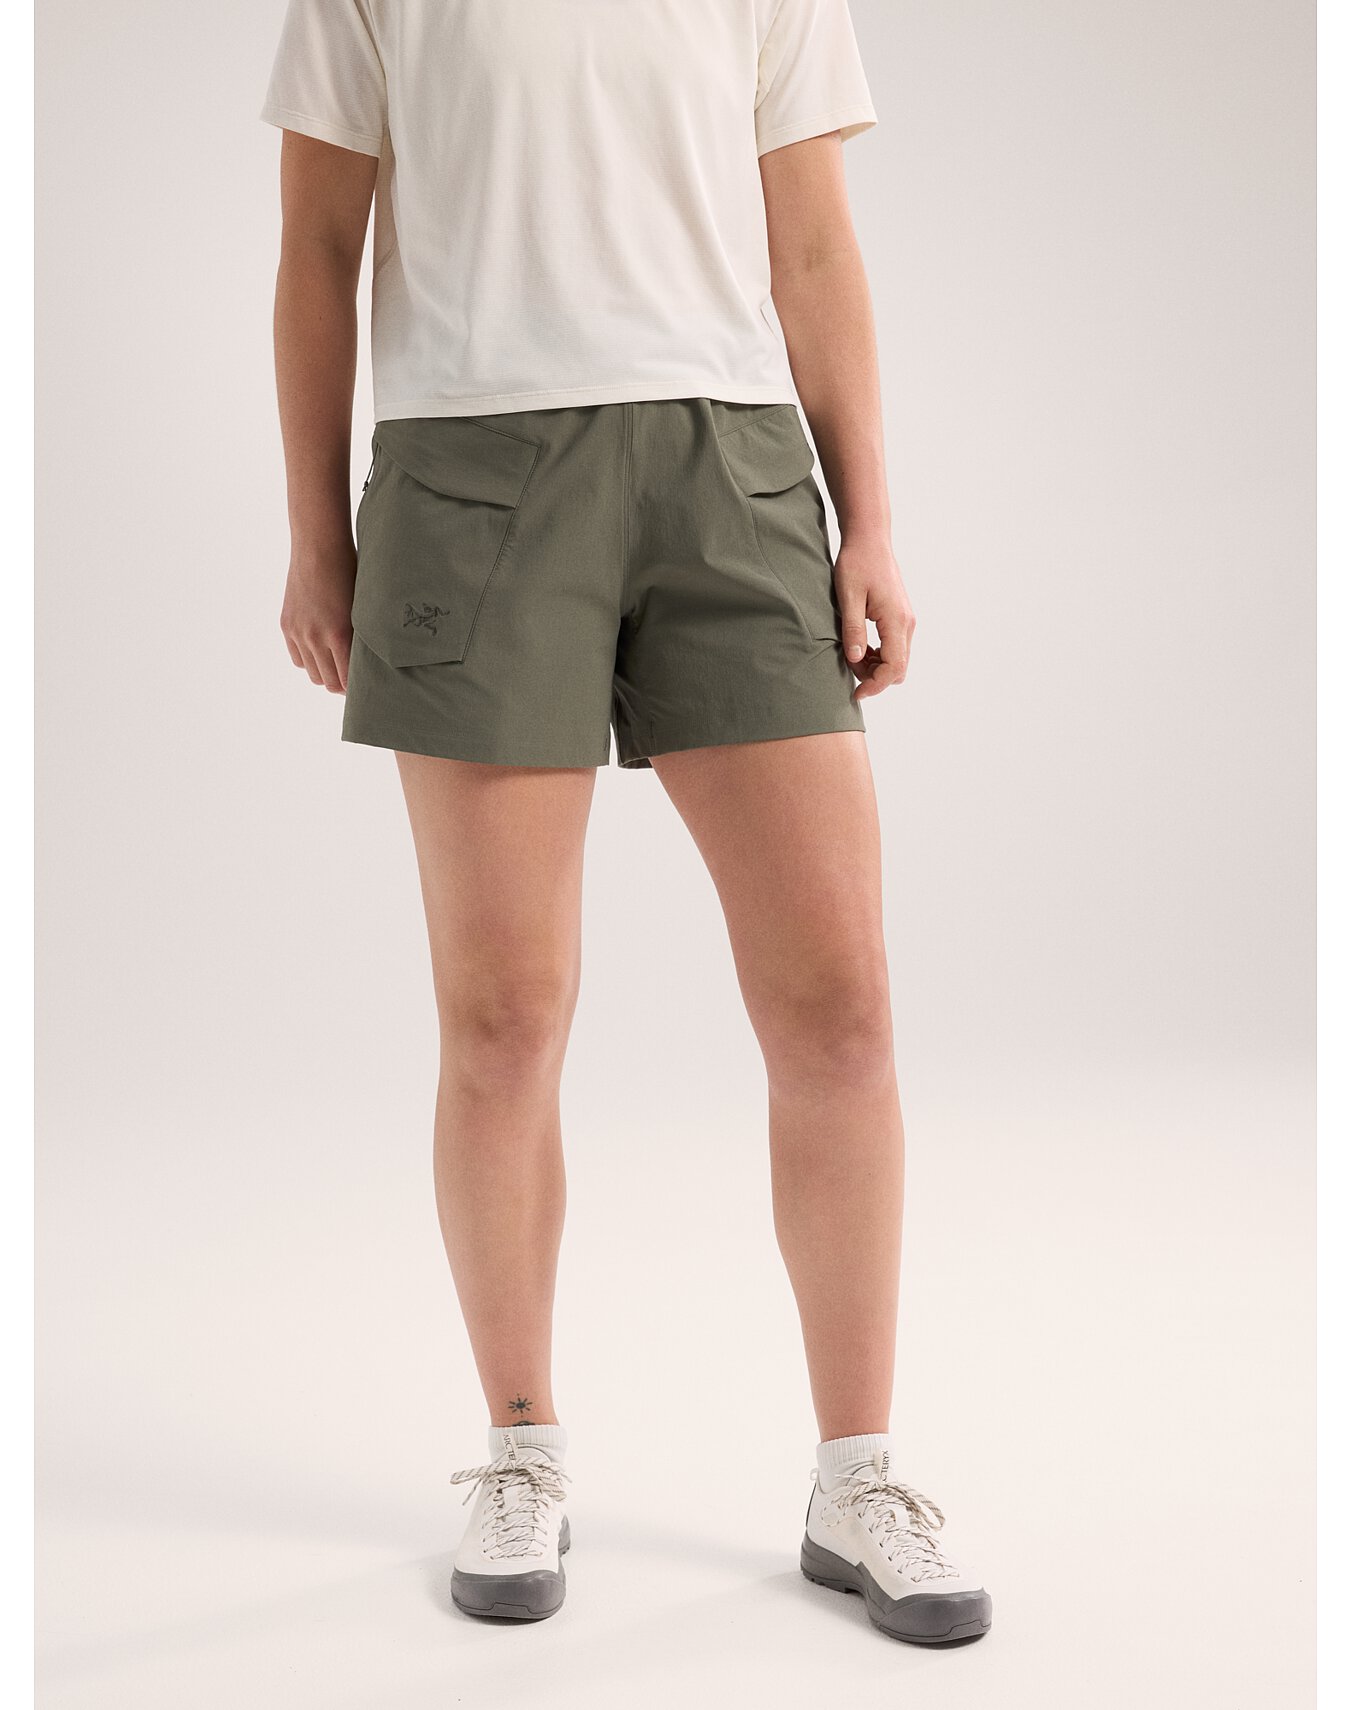 Women's Shorts | Arc'teryx